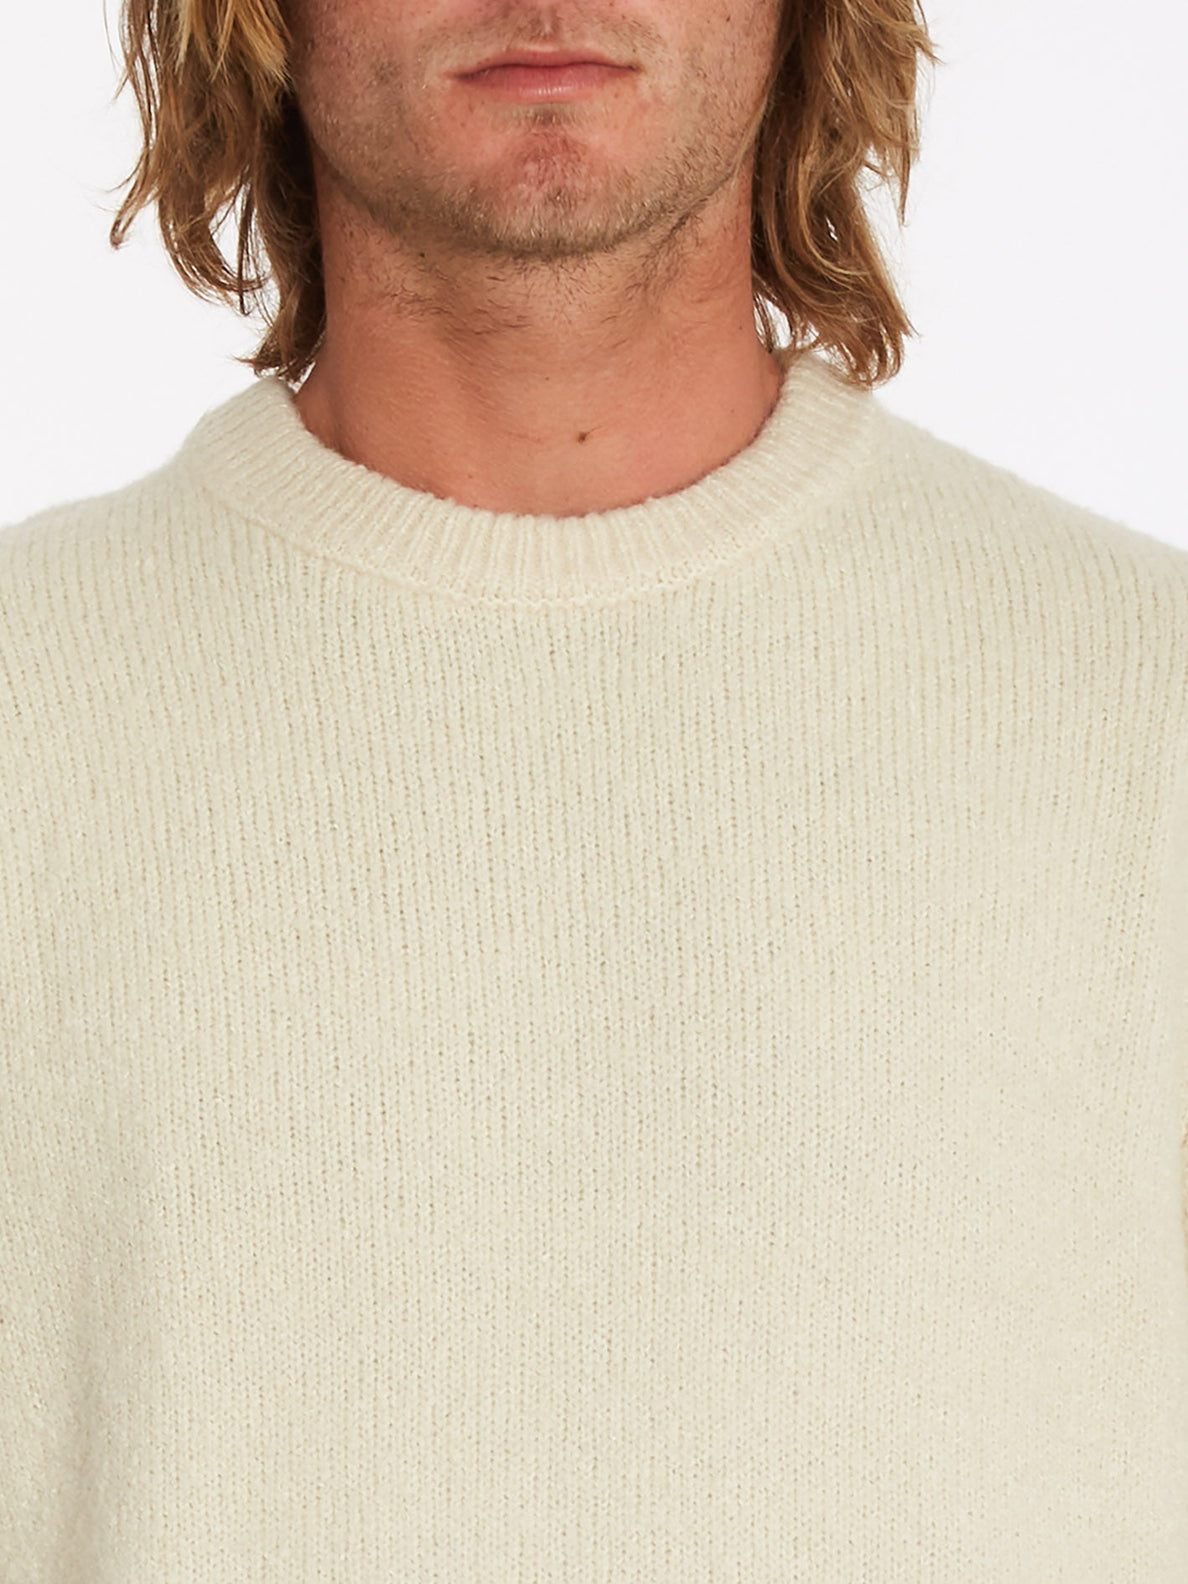 Ledthem Sweater - WHITECAP GREY (A0732201_WCG) [4]